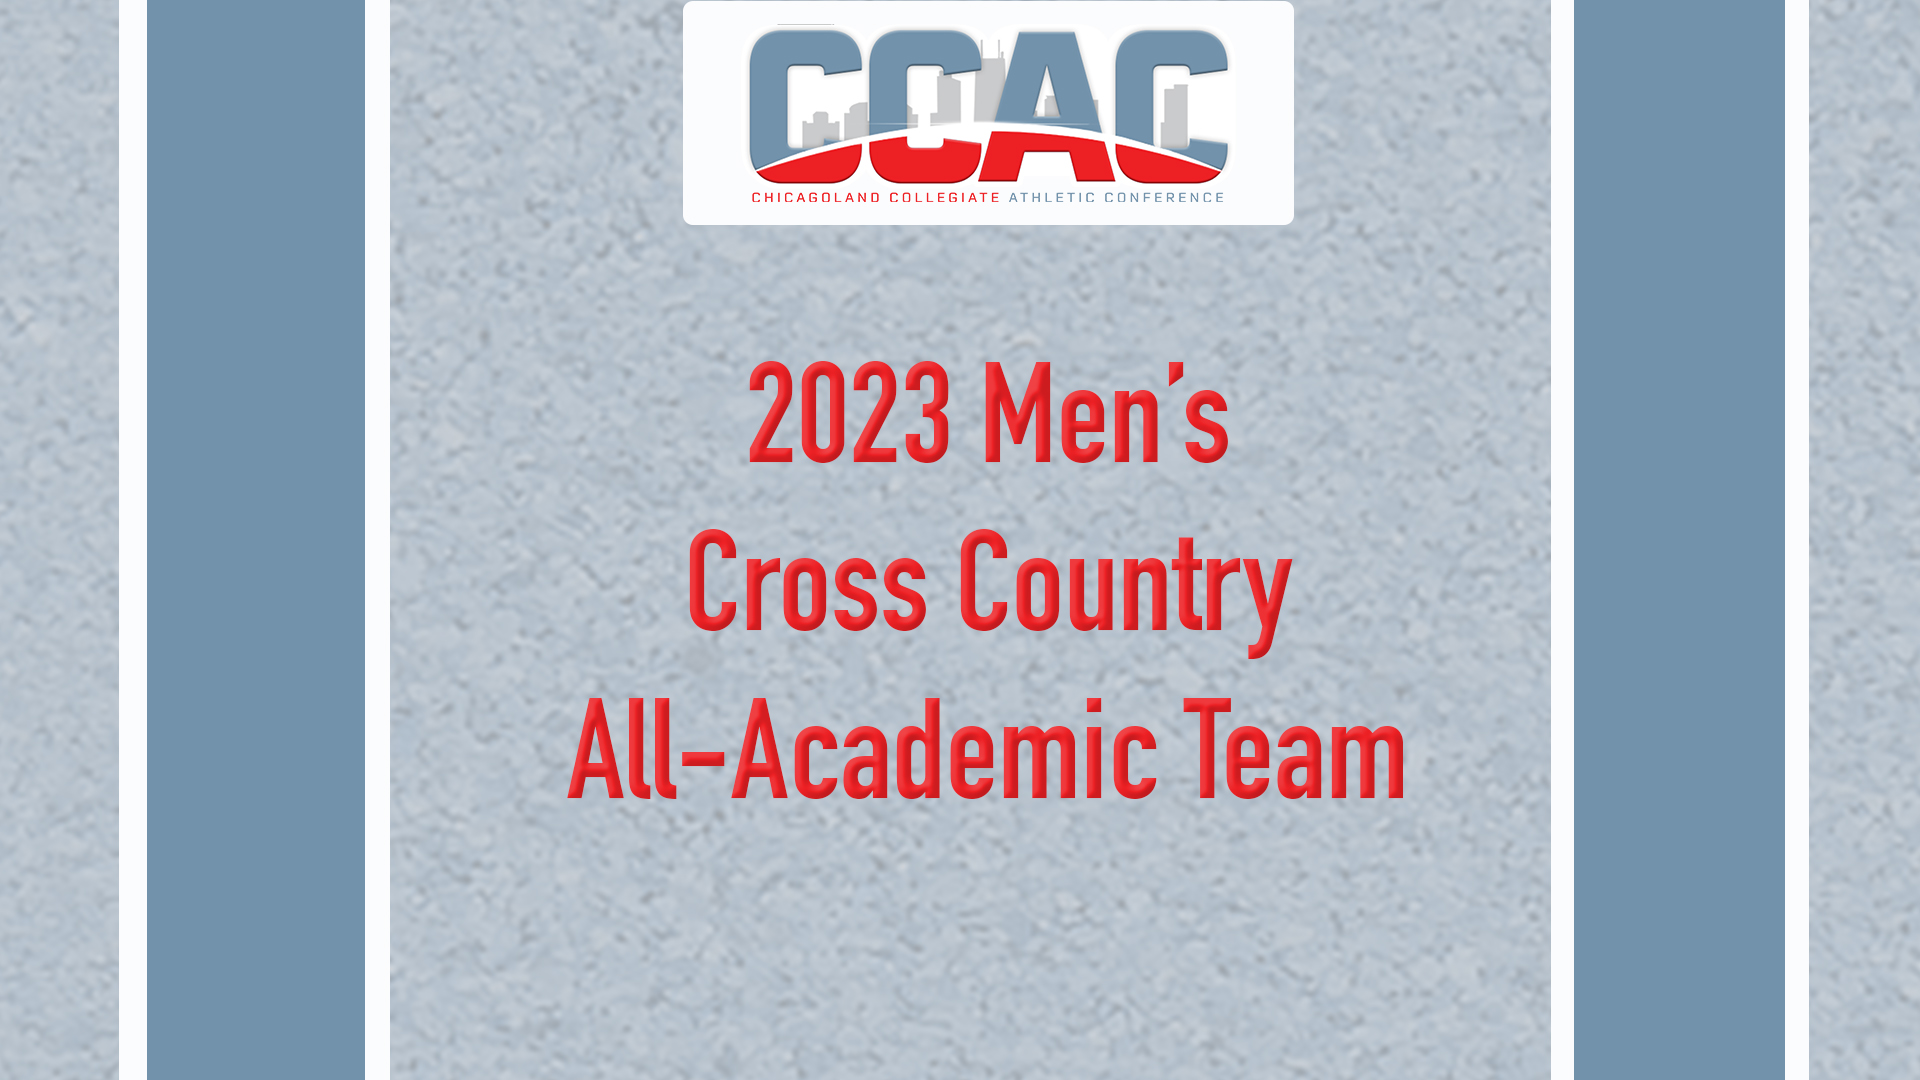 Men's Cross Country All-Academic Team Announced